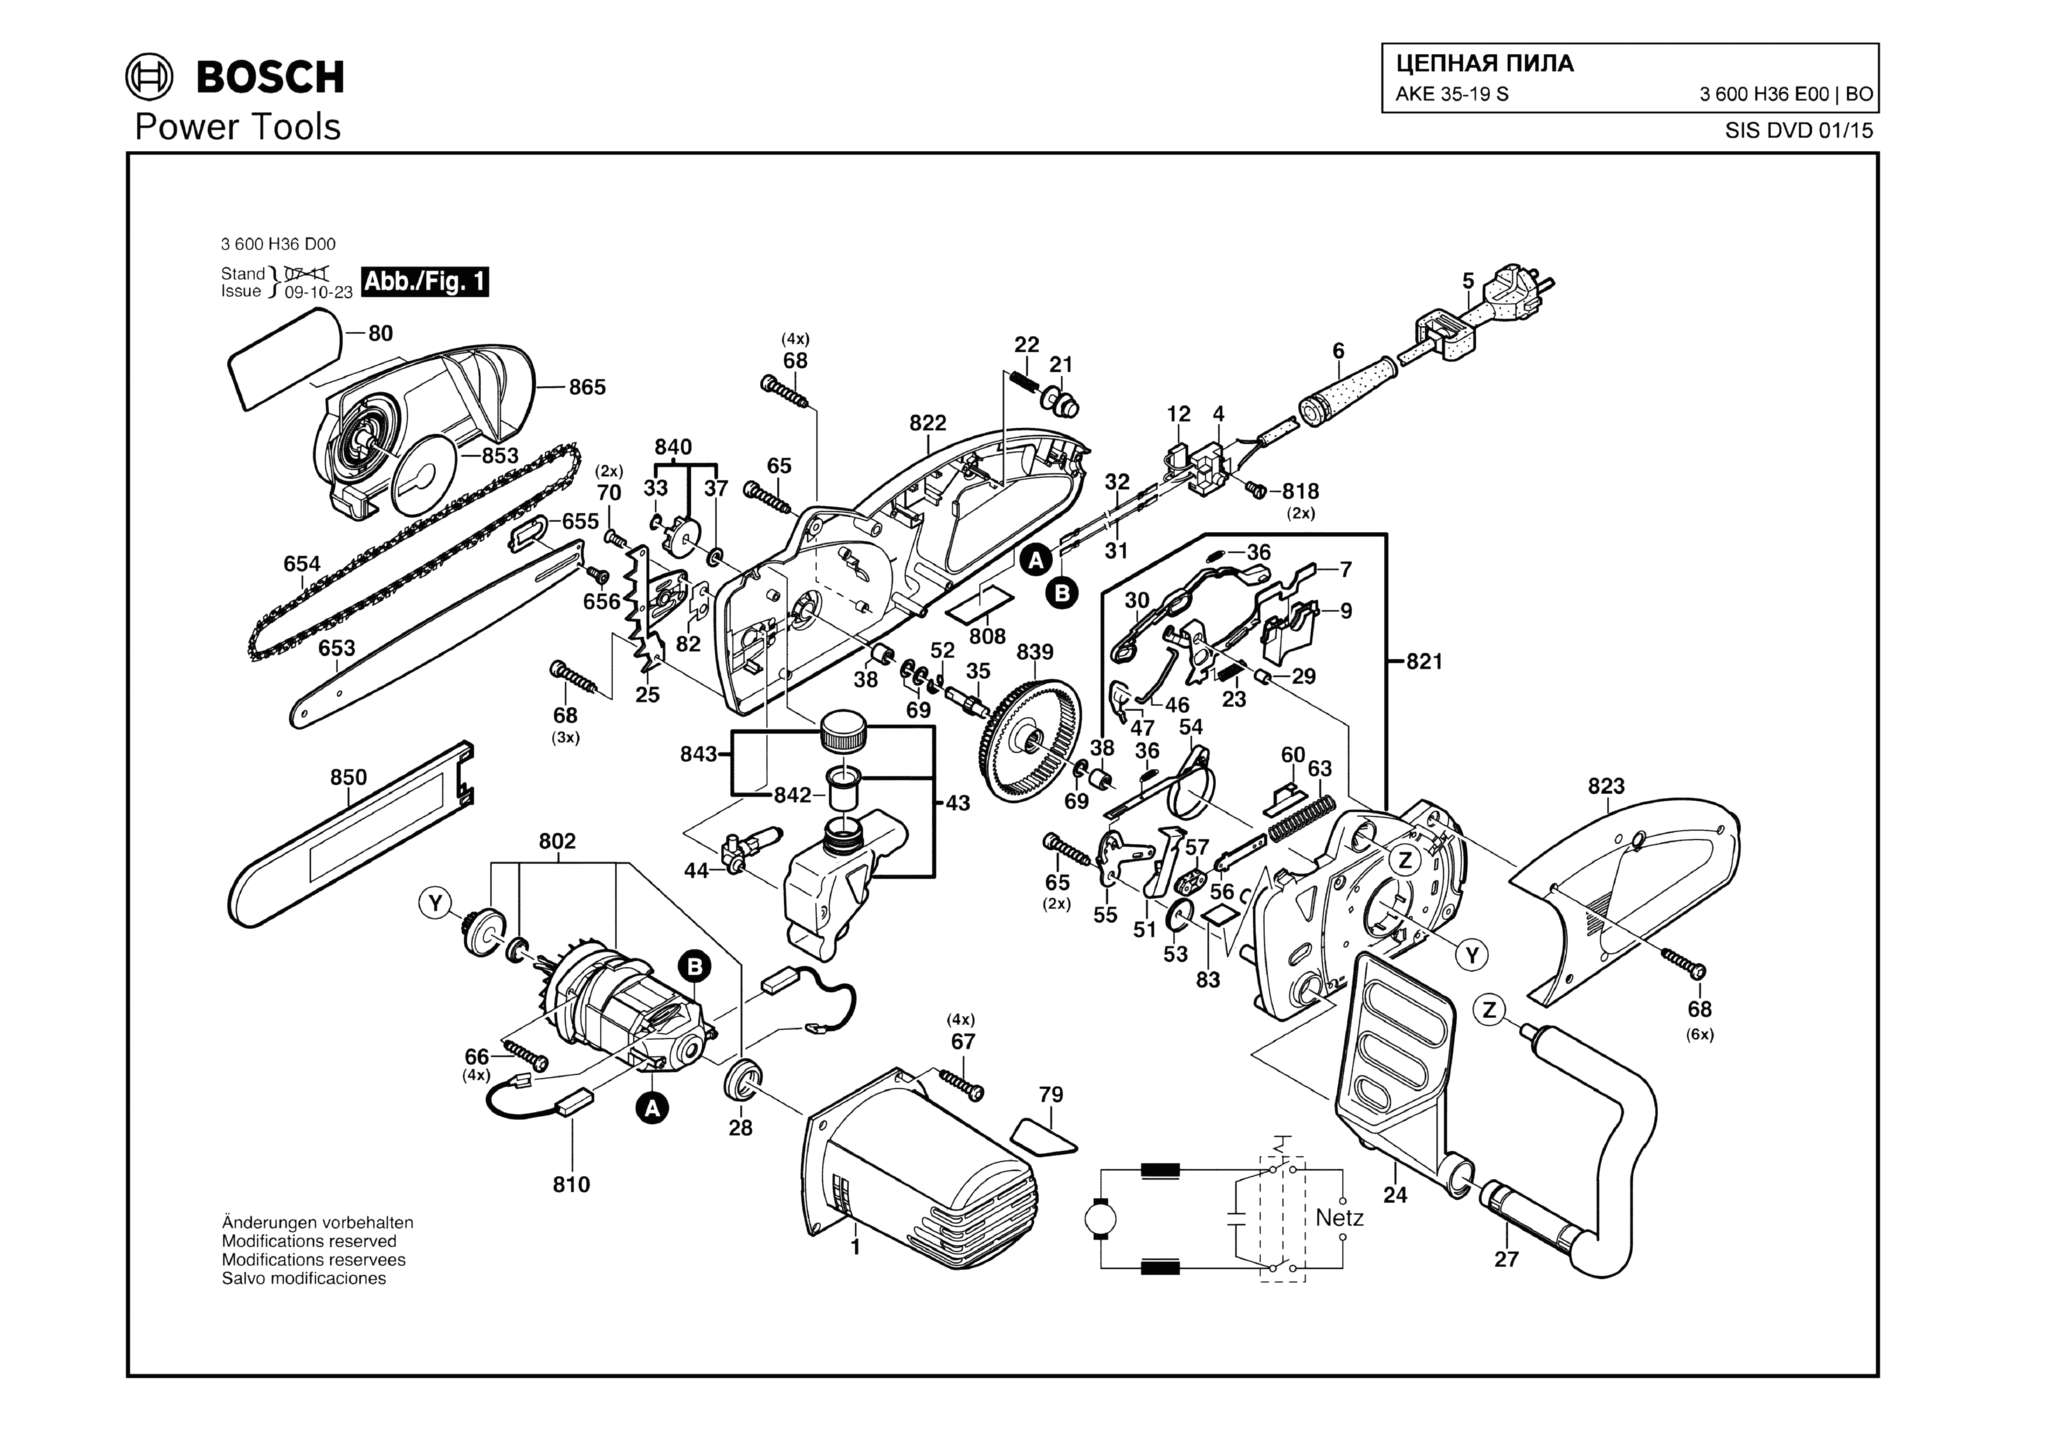 Запчасти, схема и деталировка Bosch AKE 35-19 S (ТИП 3600H36E00)